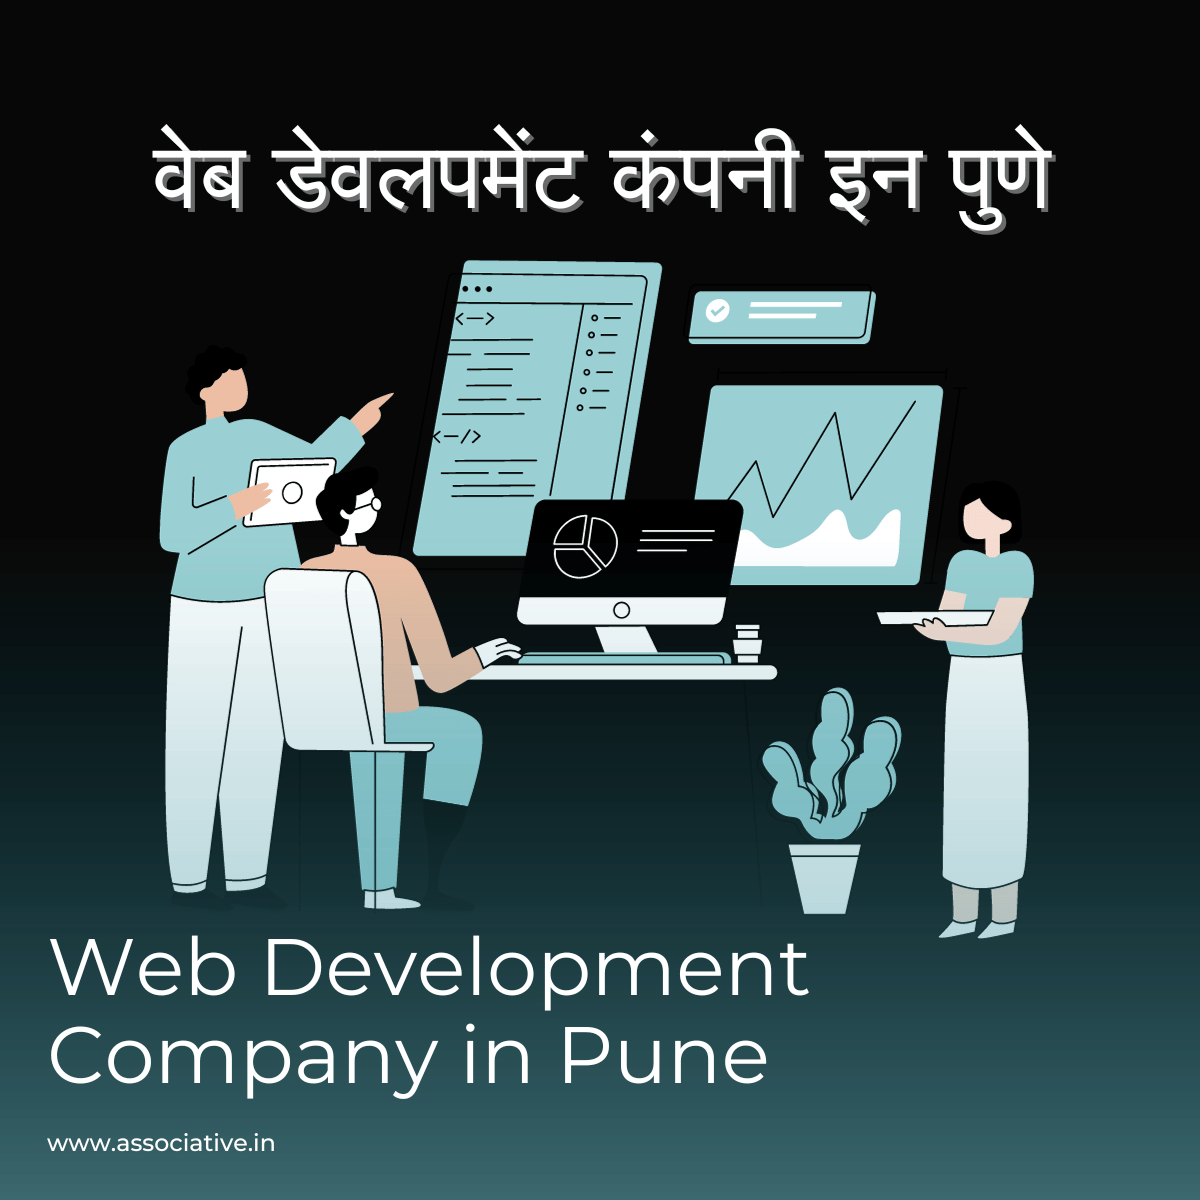 Web Development Company in Pune वेब डेवलपमेंट कंपनी इन पुणे